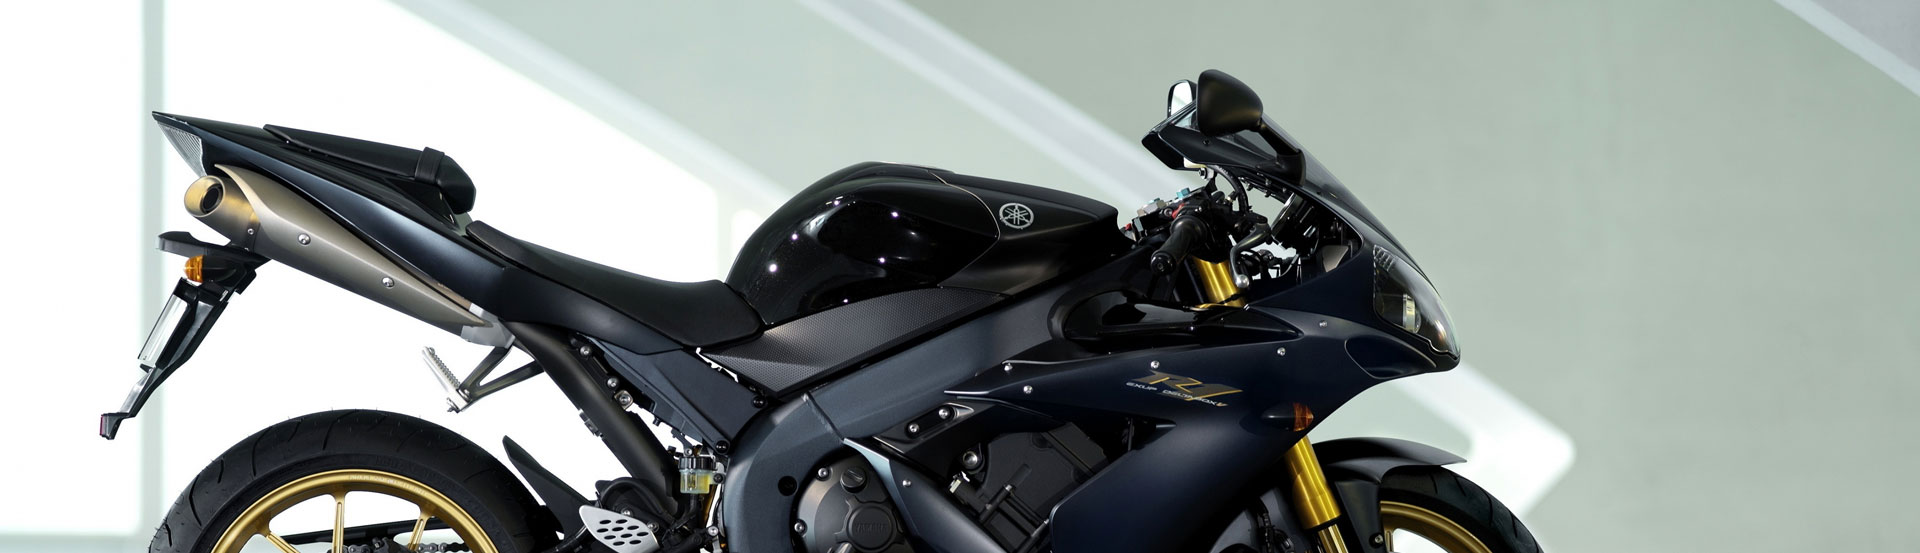 Yamaha Motorcycle Insurance